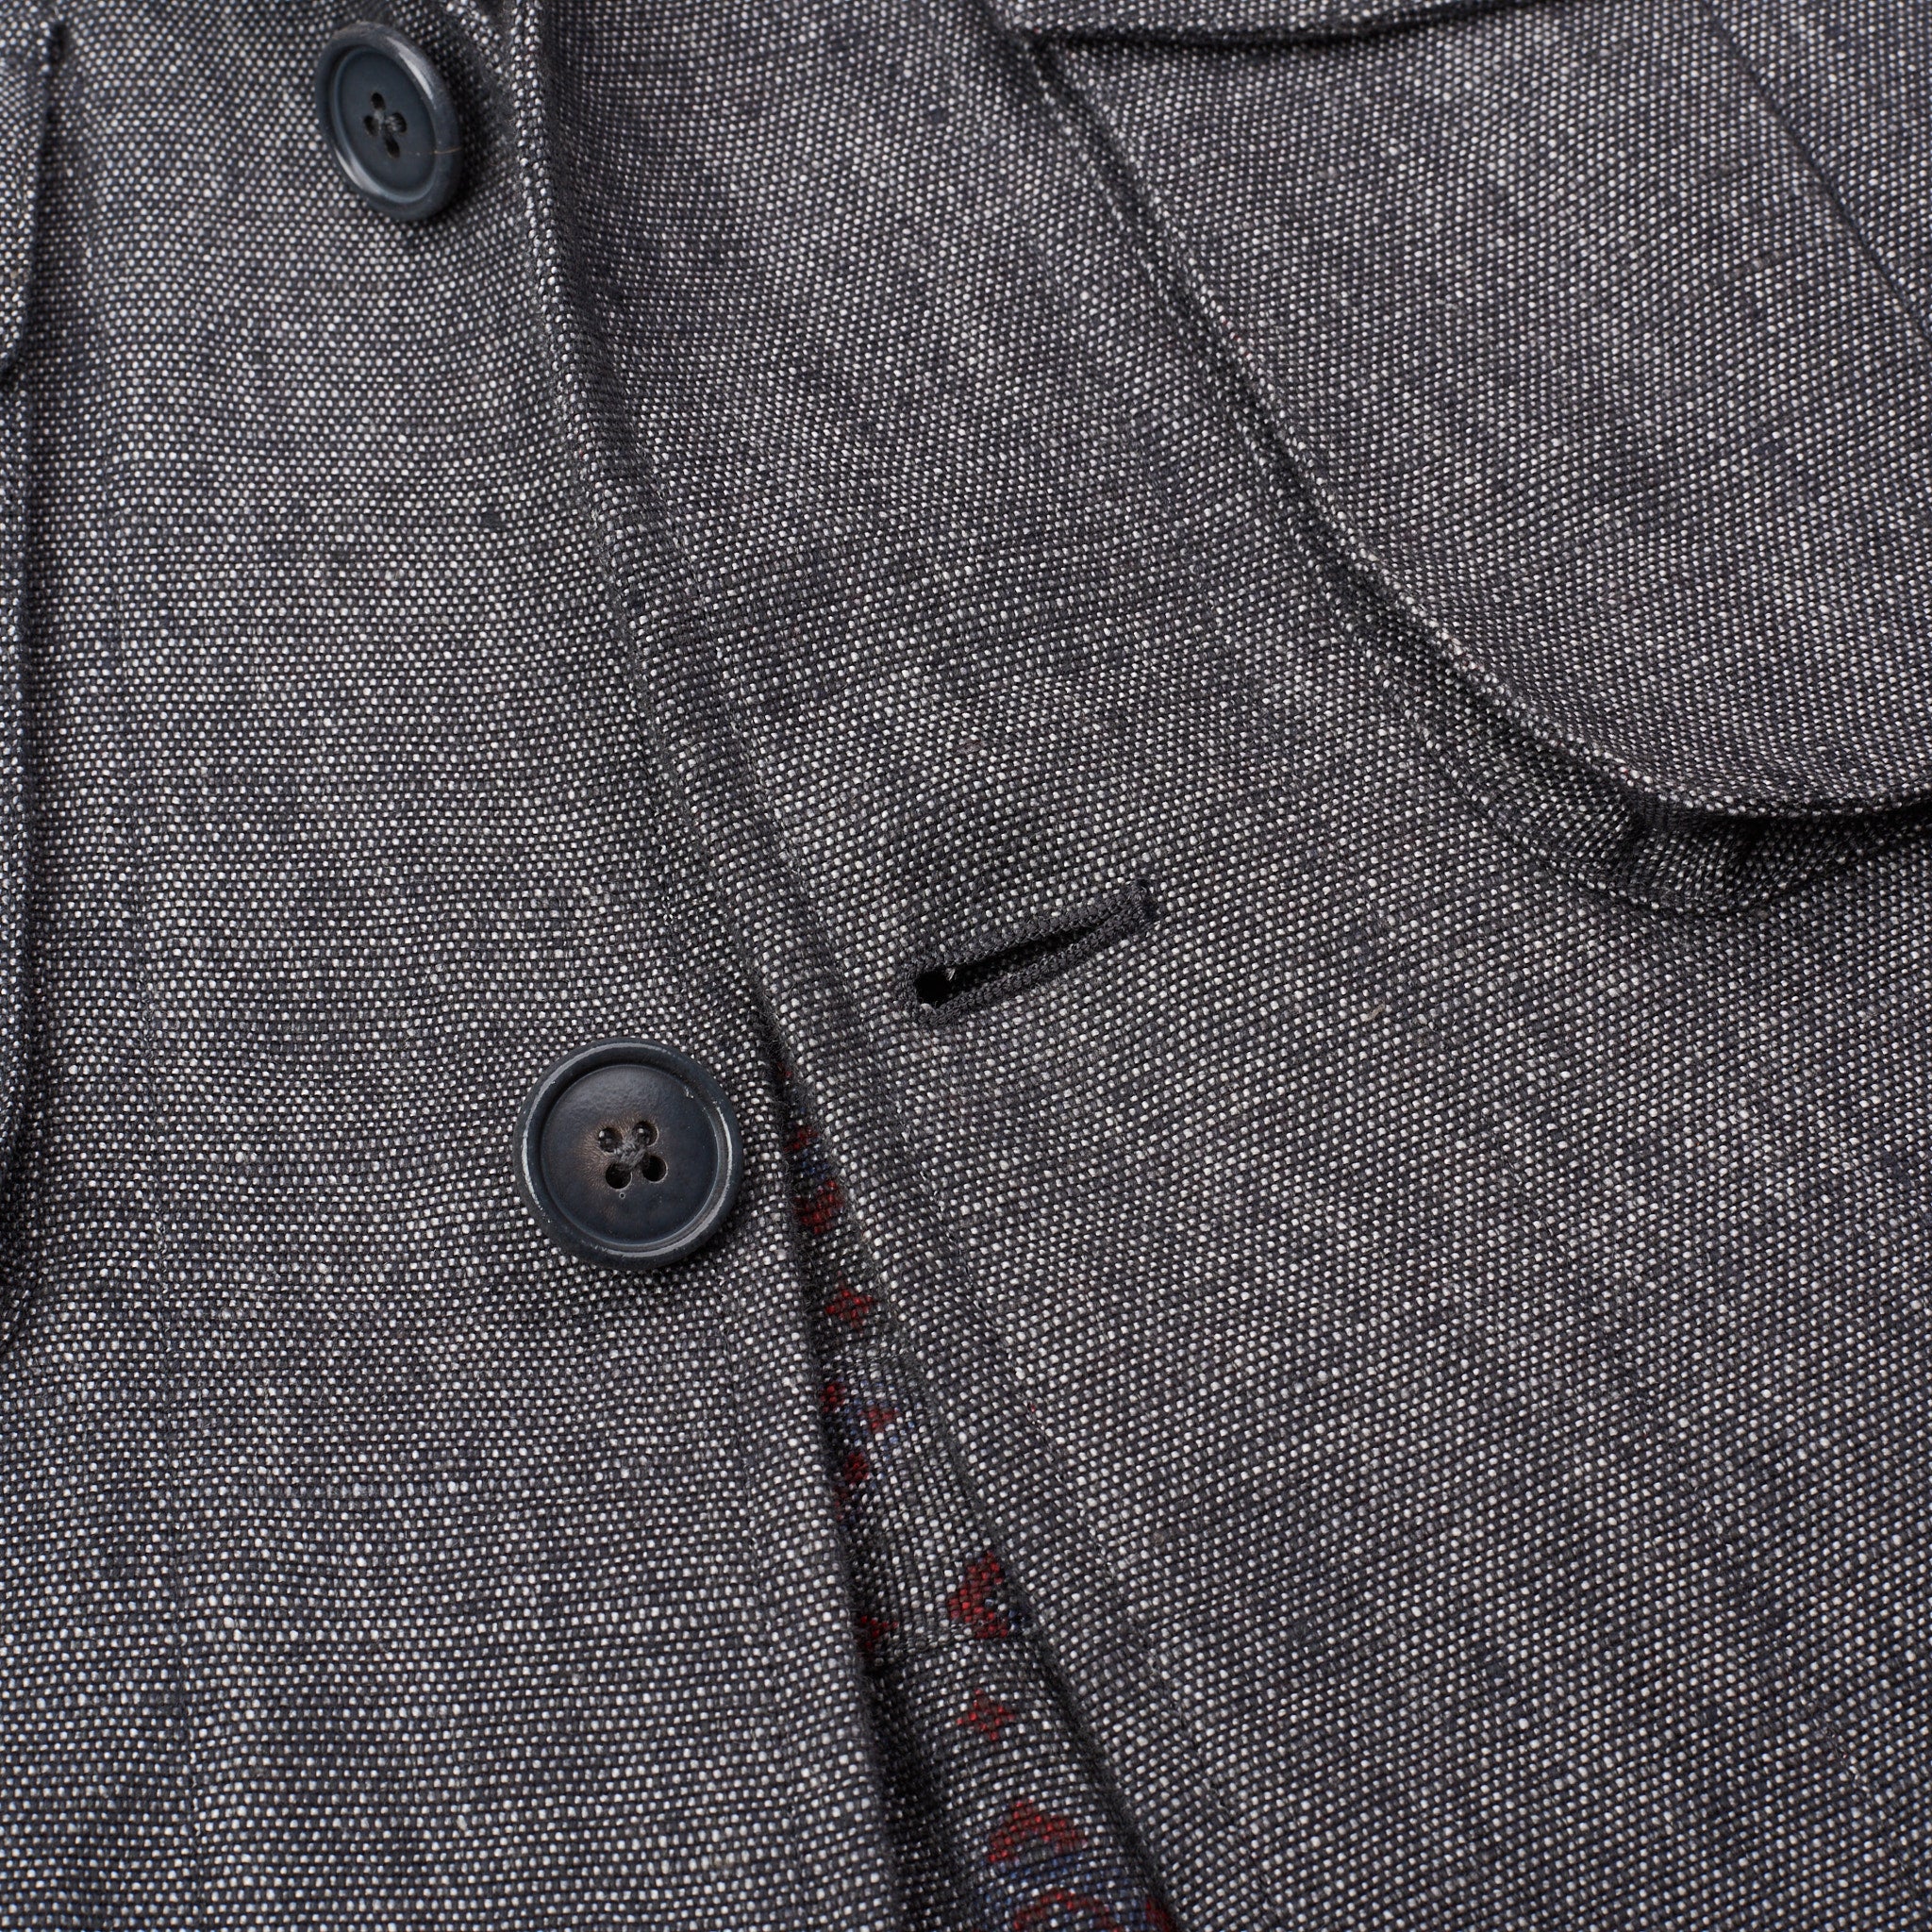 BELVEST Handmade Gray Linen Unlined Field Jacket Coat EU 50 NEW US 40 BELVEST